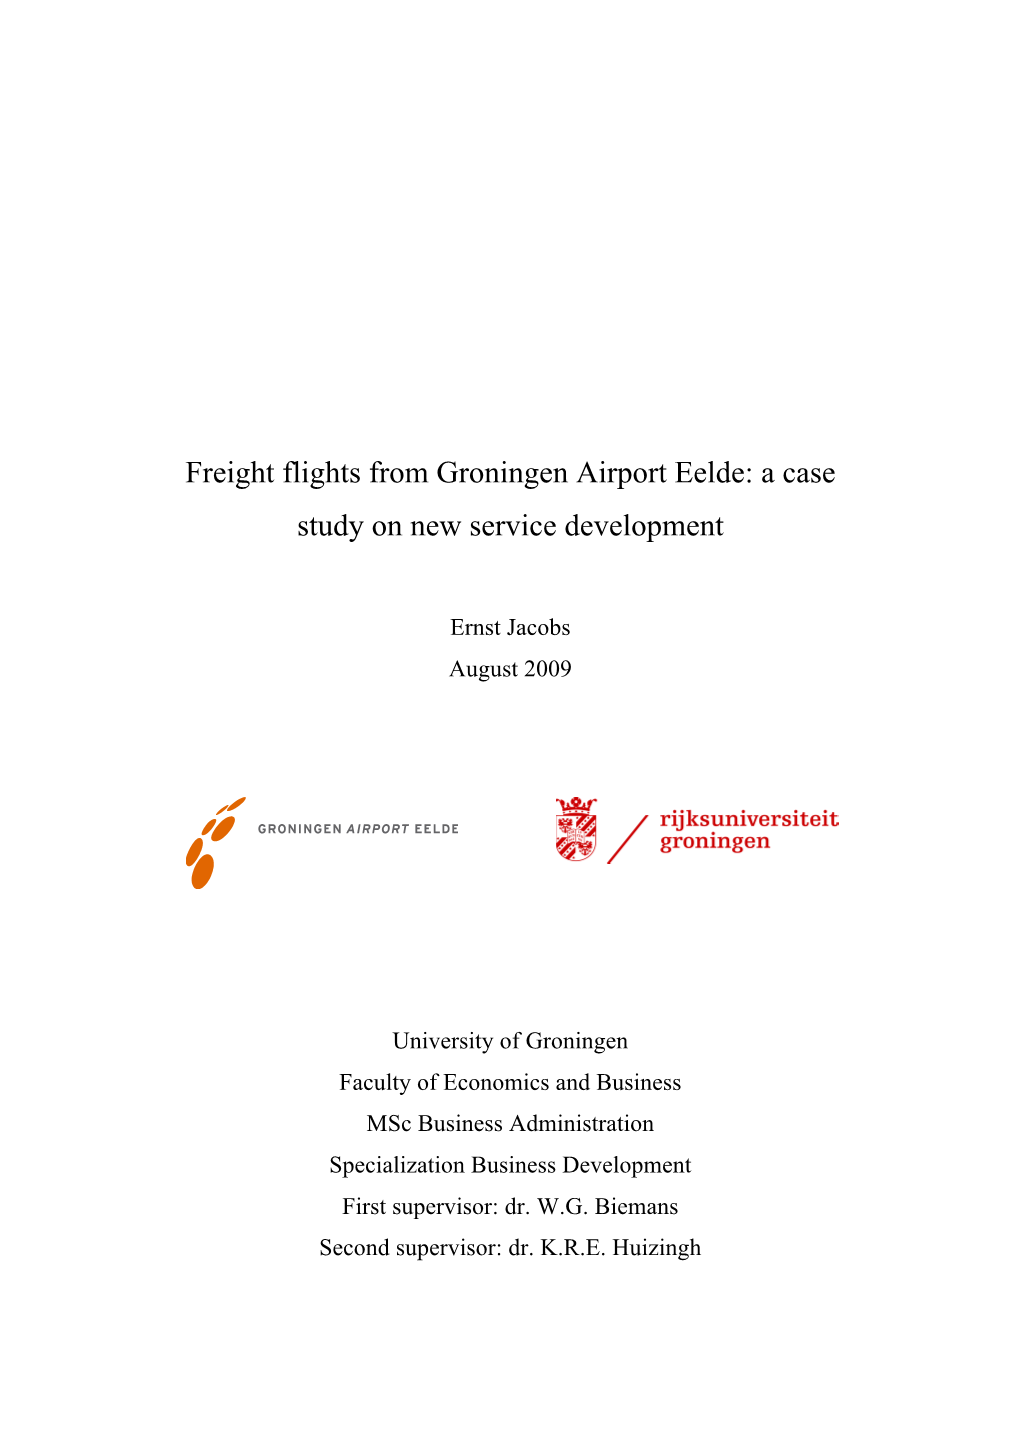 Freight Flights from Groningen Airport Eelde: a Case Study on New Service Development